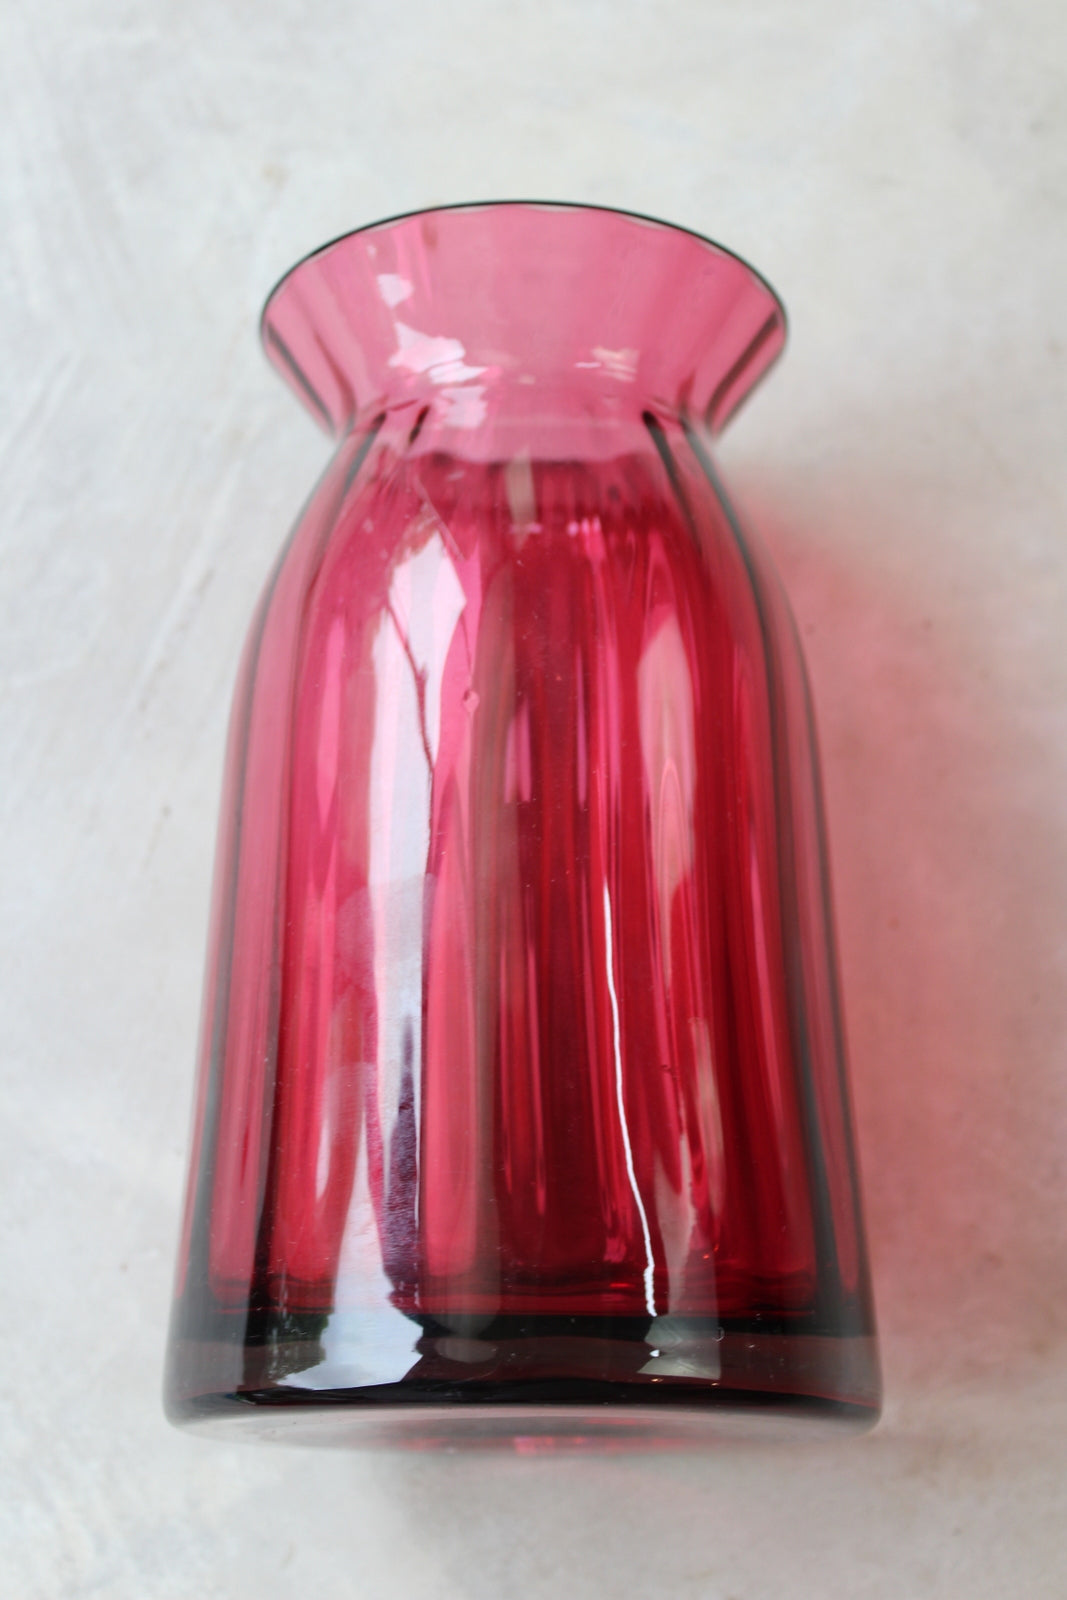 Large Cranberry Glass Vase - Kernow Furniture